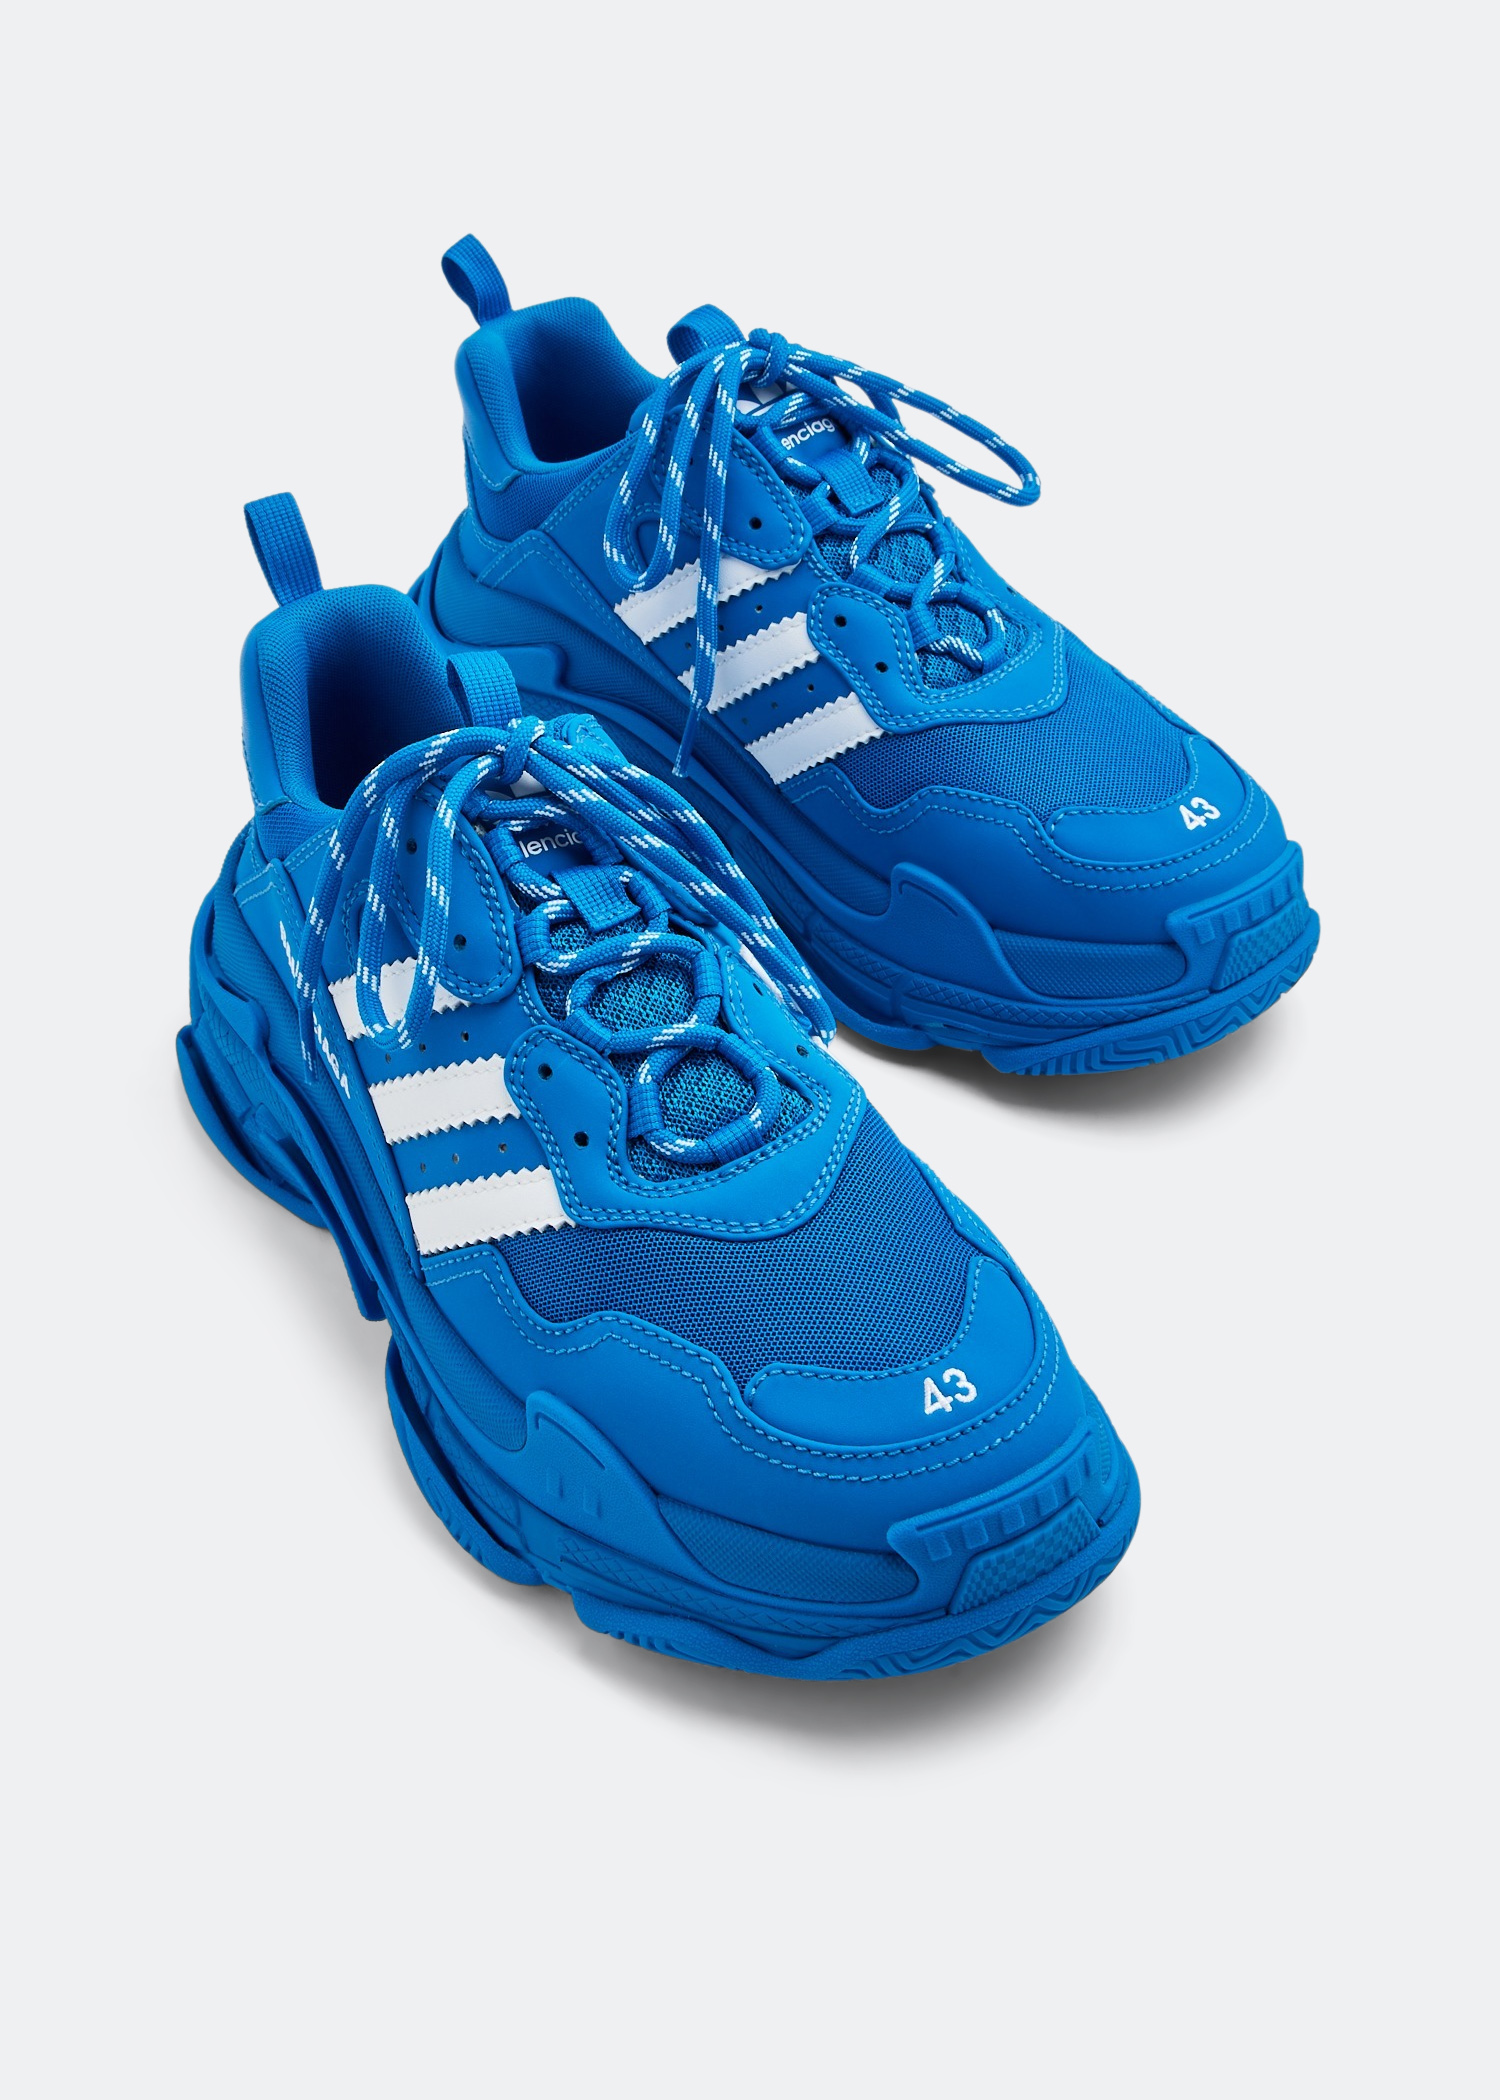 Balenciaga x adidas Triple S sneakers for Men - Blue in KSA 